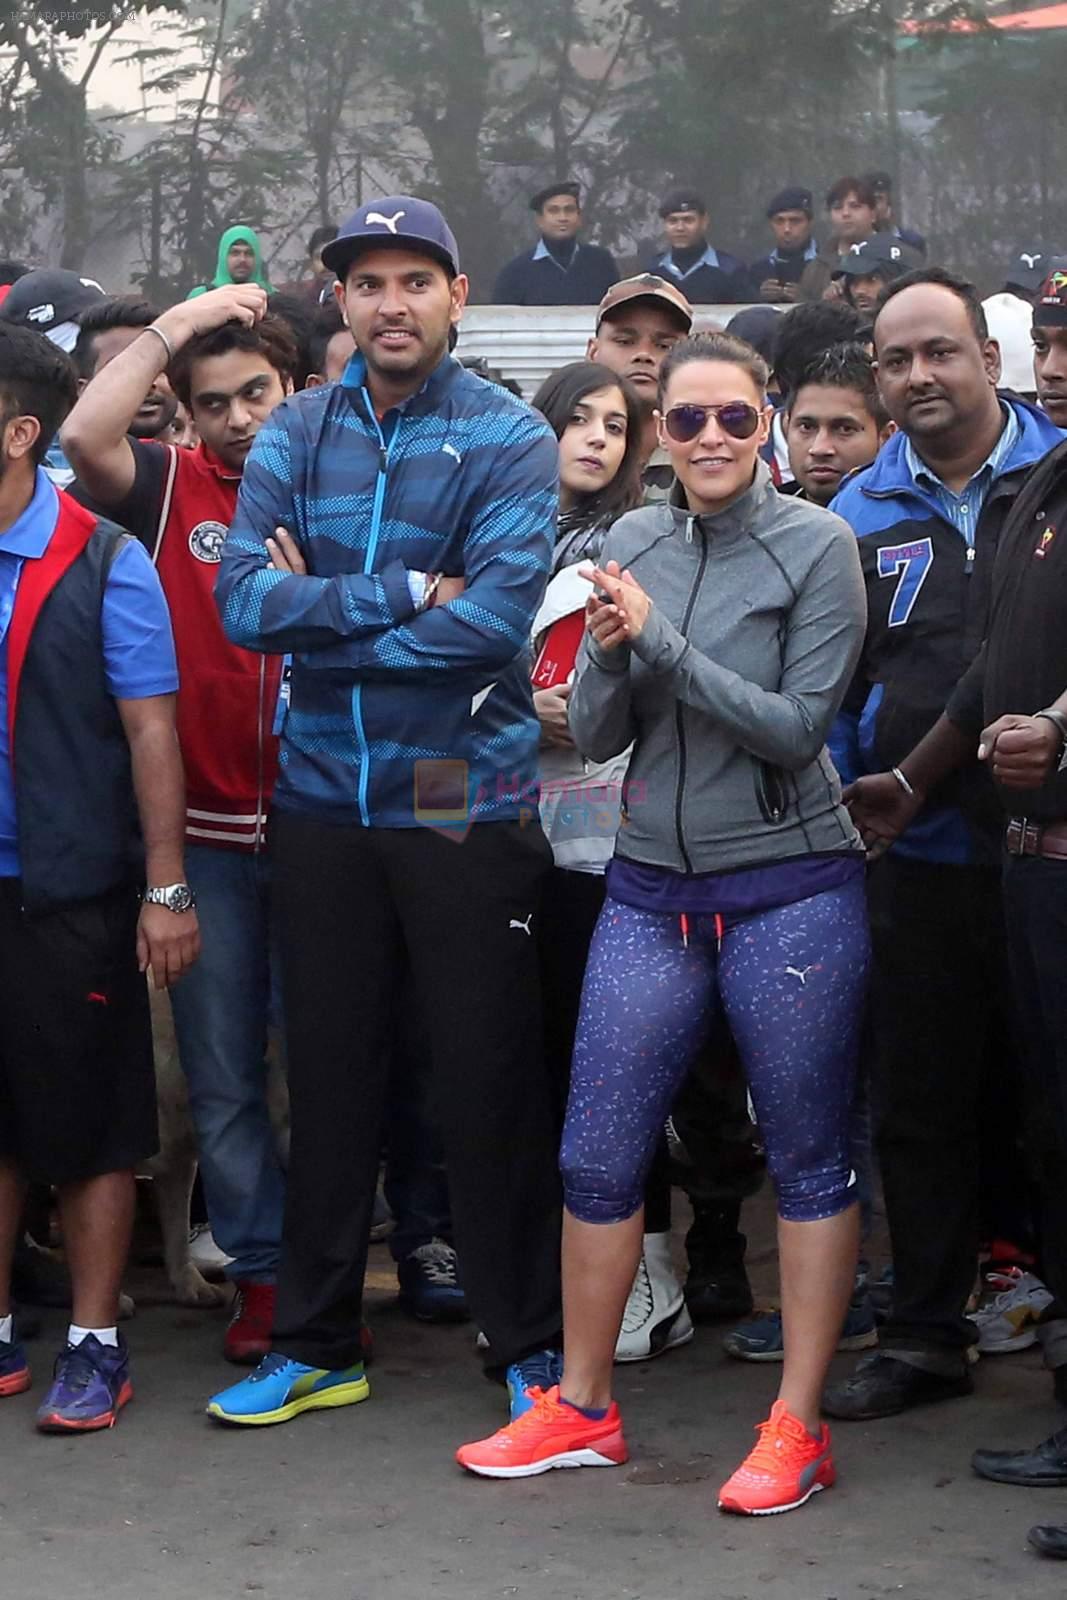 Neha Dhupia and Yuvraj Singh in Kolkatta for a marathon on 22nd Dec 2015